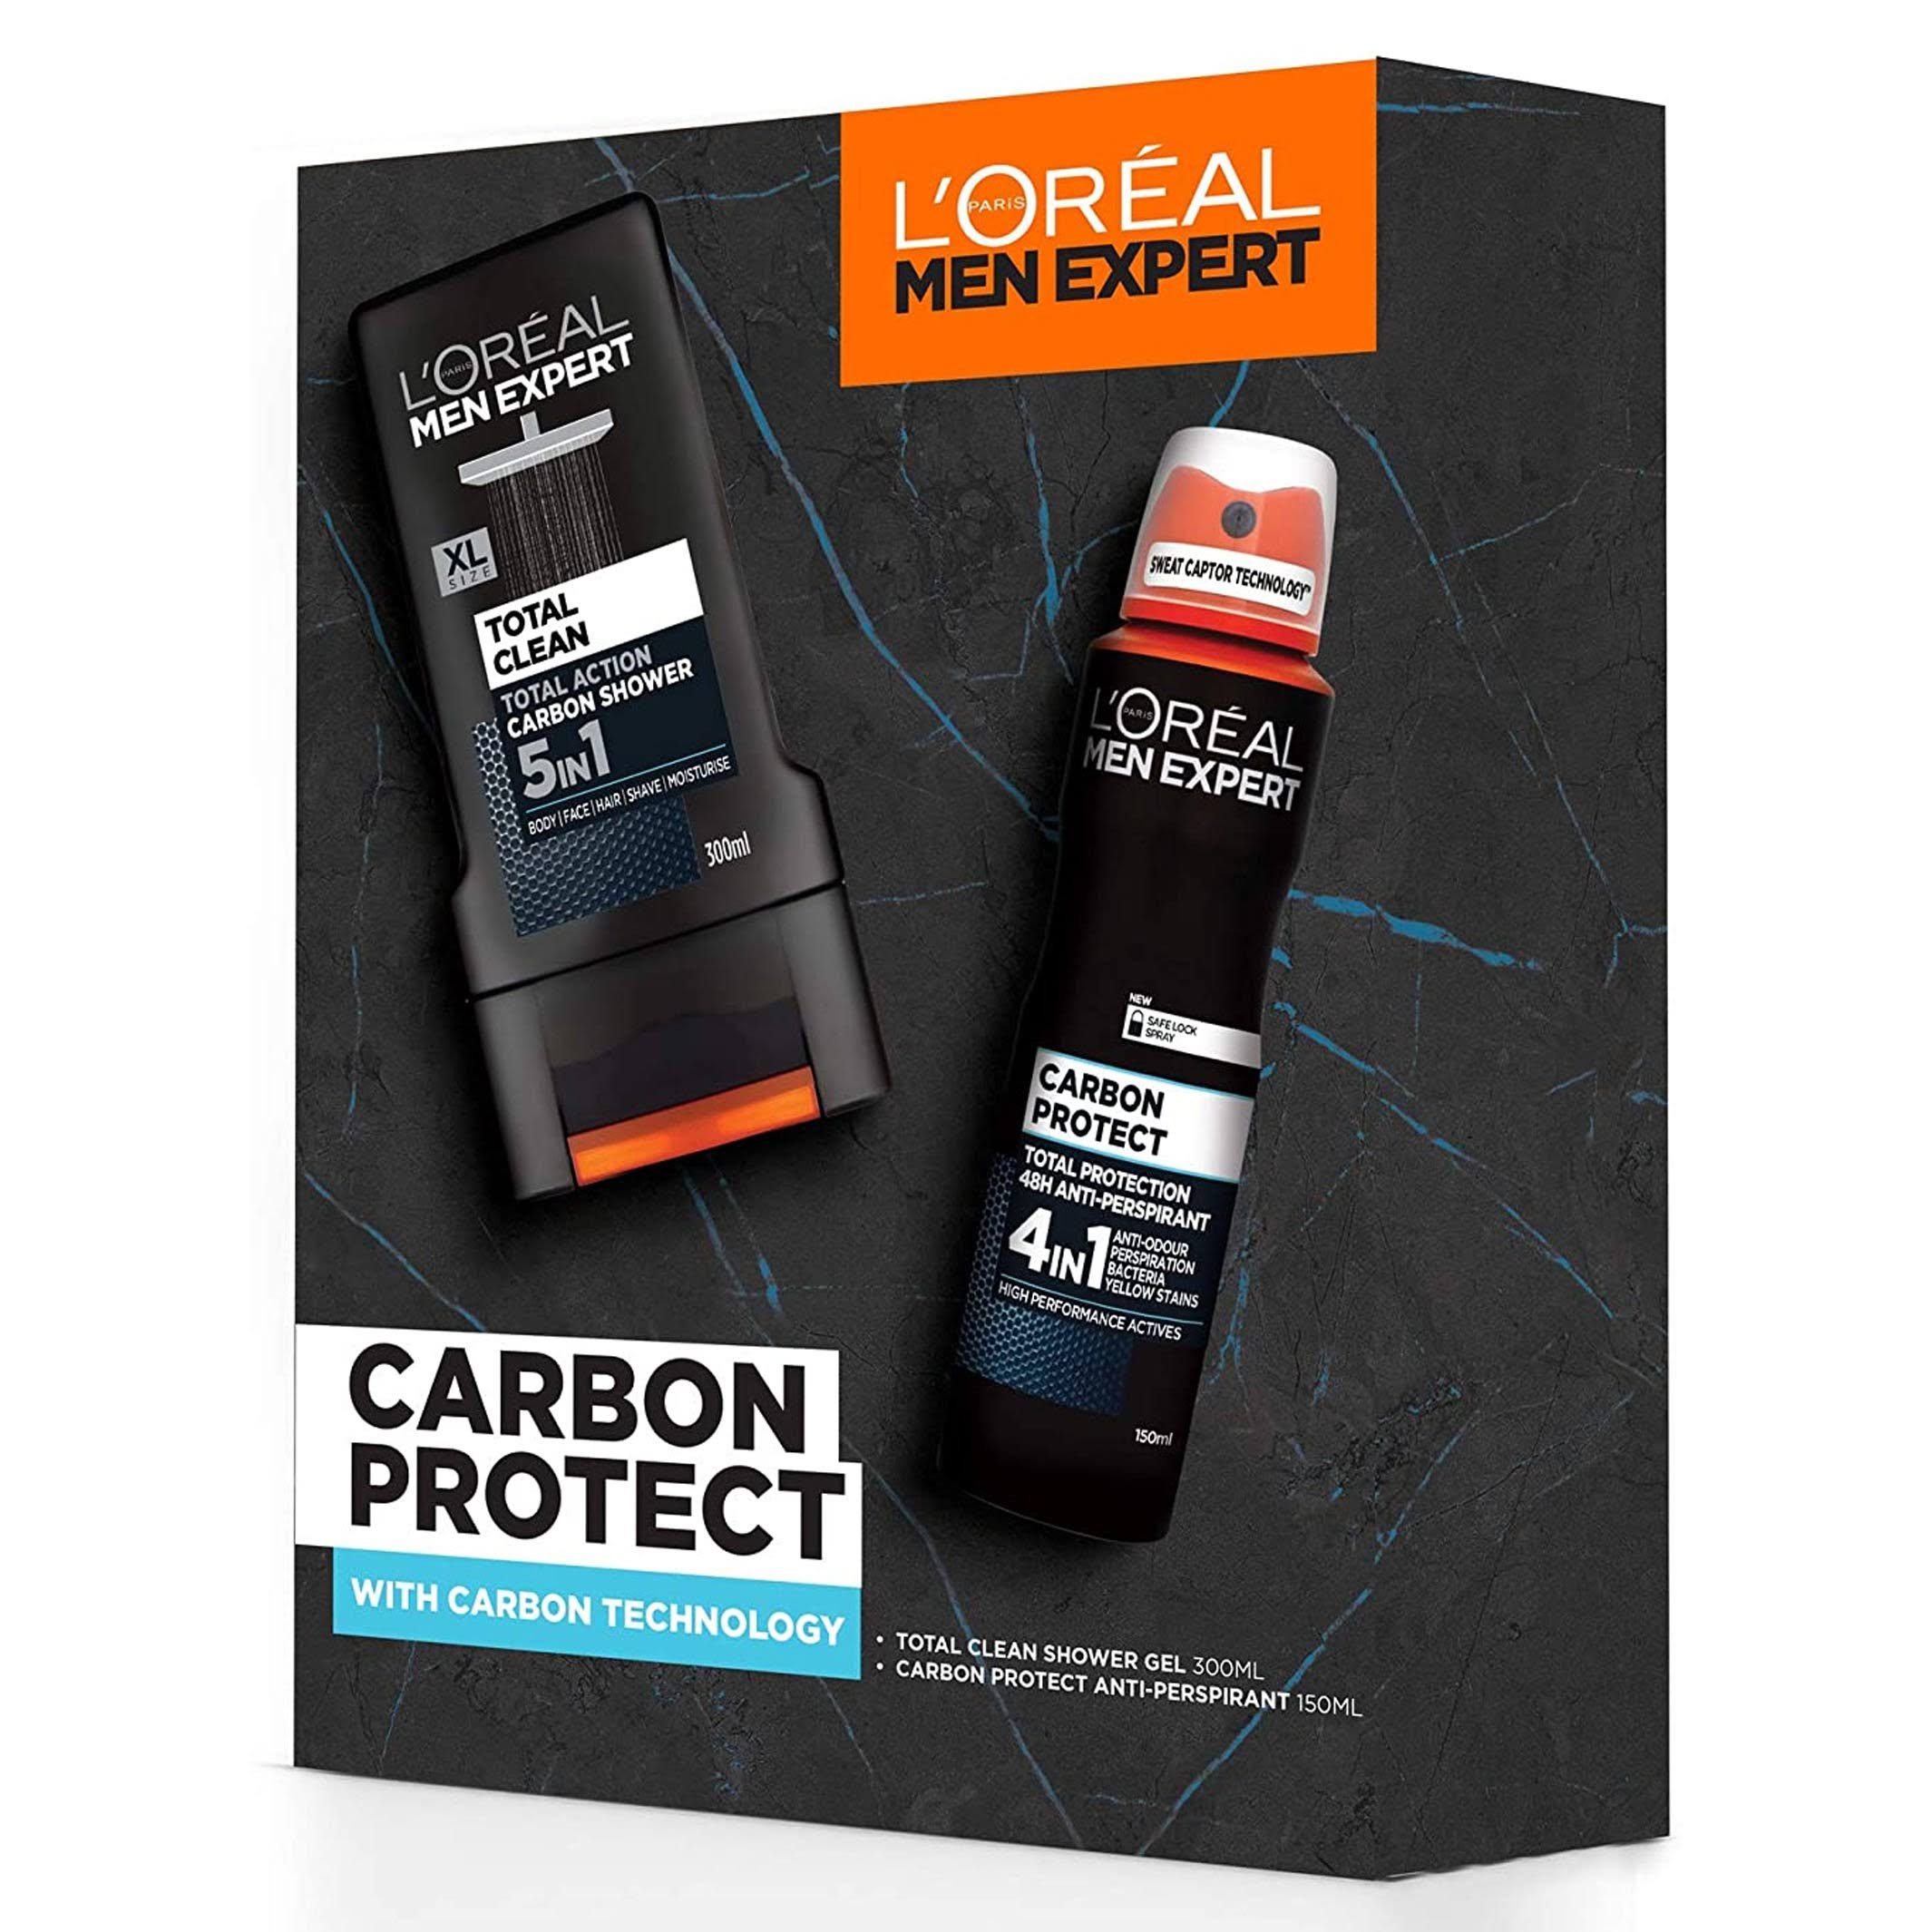 L'Oreal Men Expert Carbon Protect Gift Set